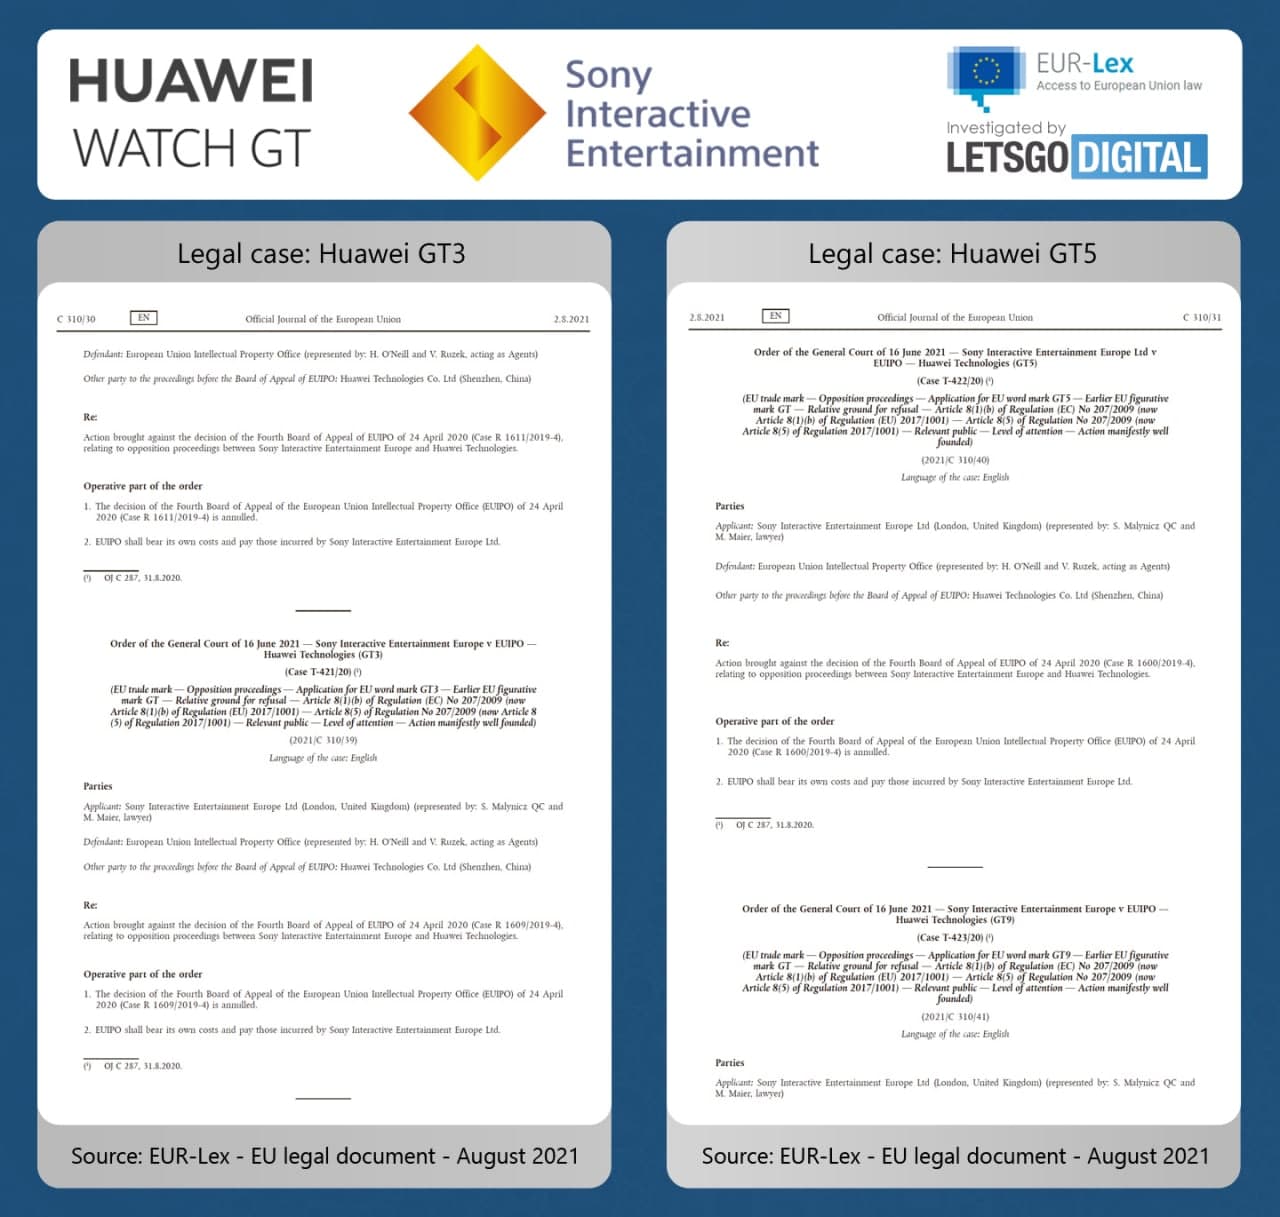 Sony Huawei Dispute